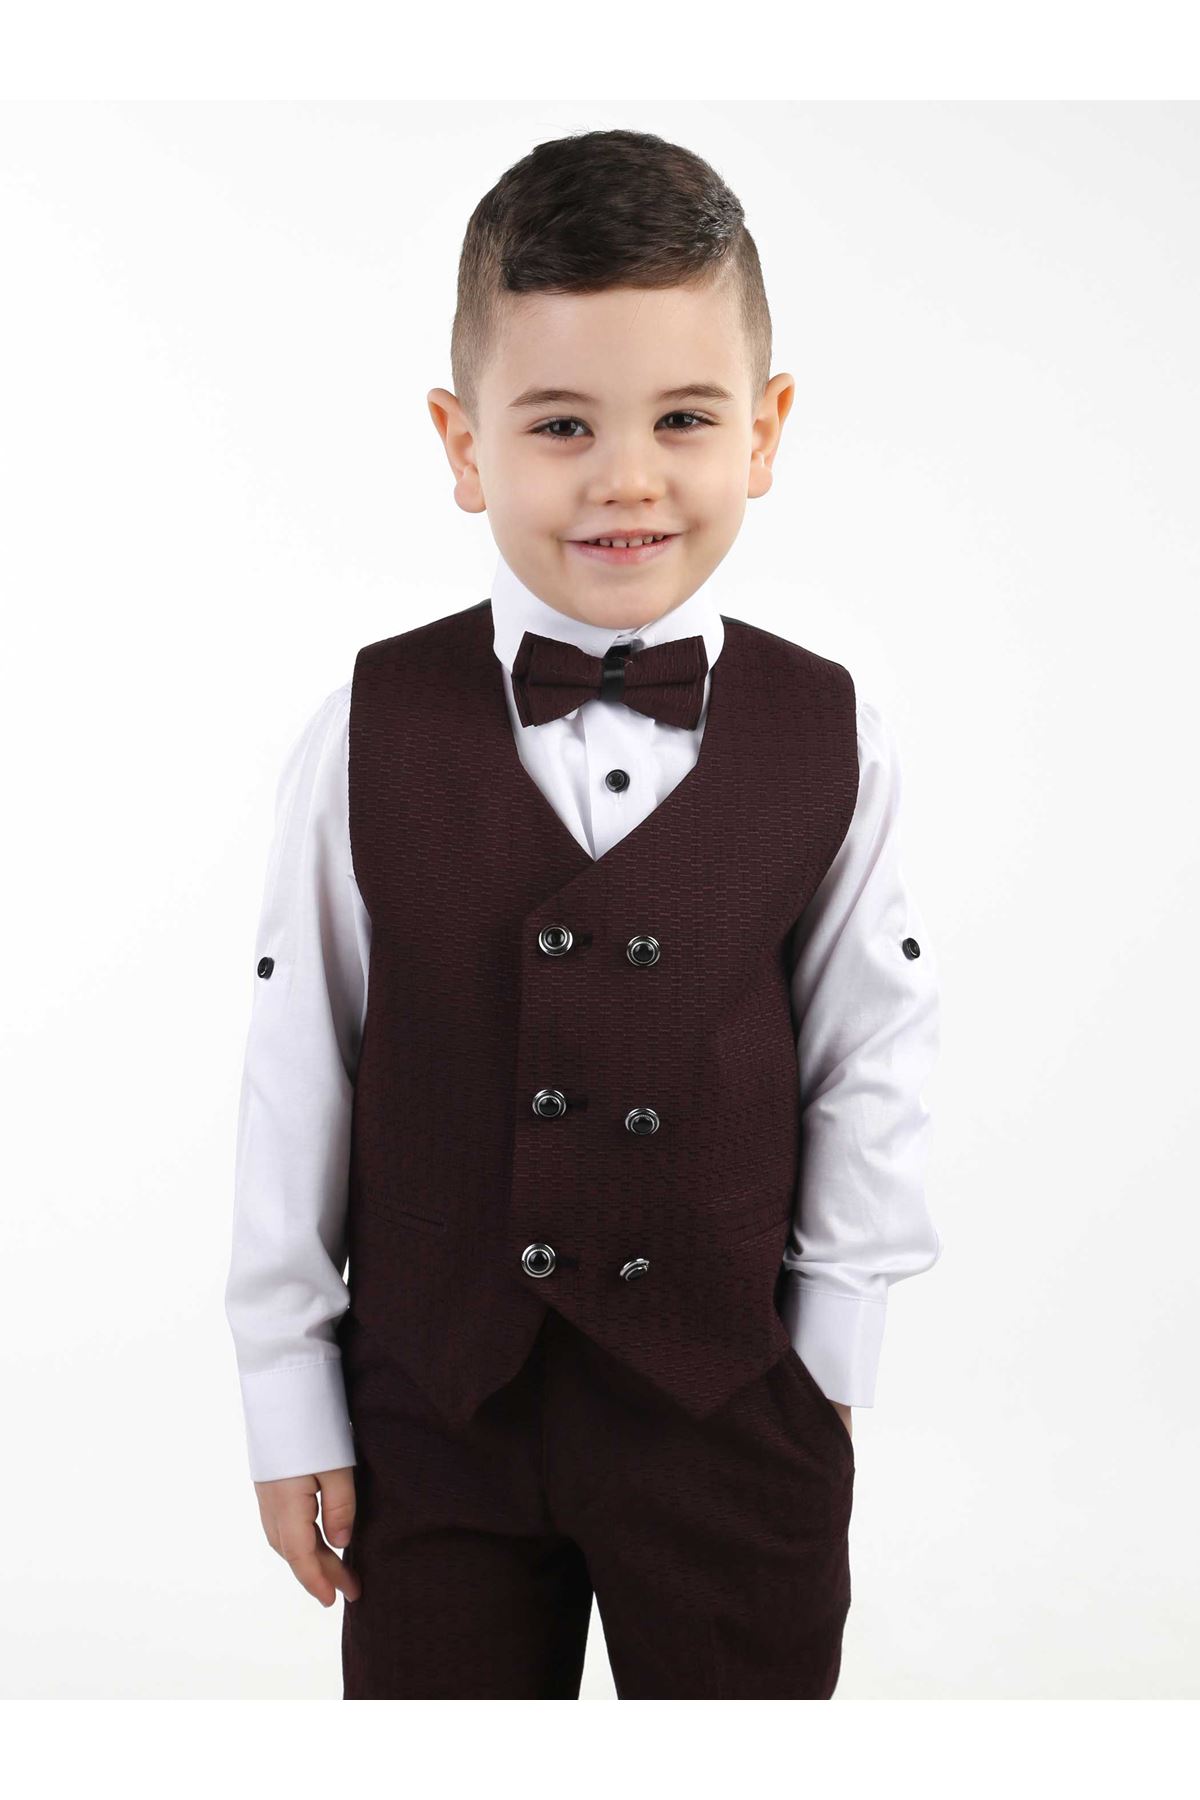 Boy's Clothes Suits Gentleman Bow Tie + Shirt + Pants + Vest Gentleman Clothing Young Suit